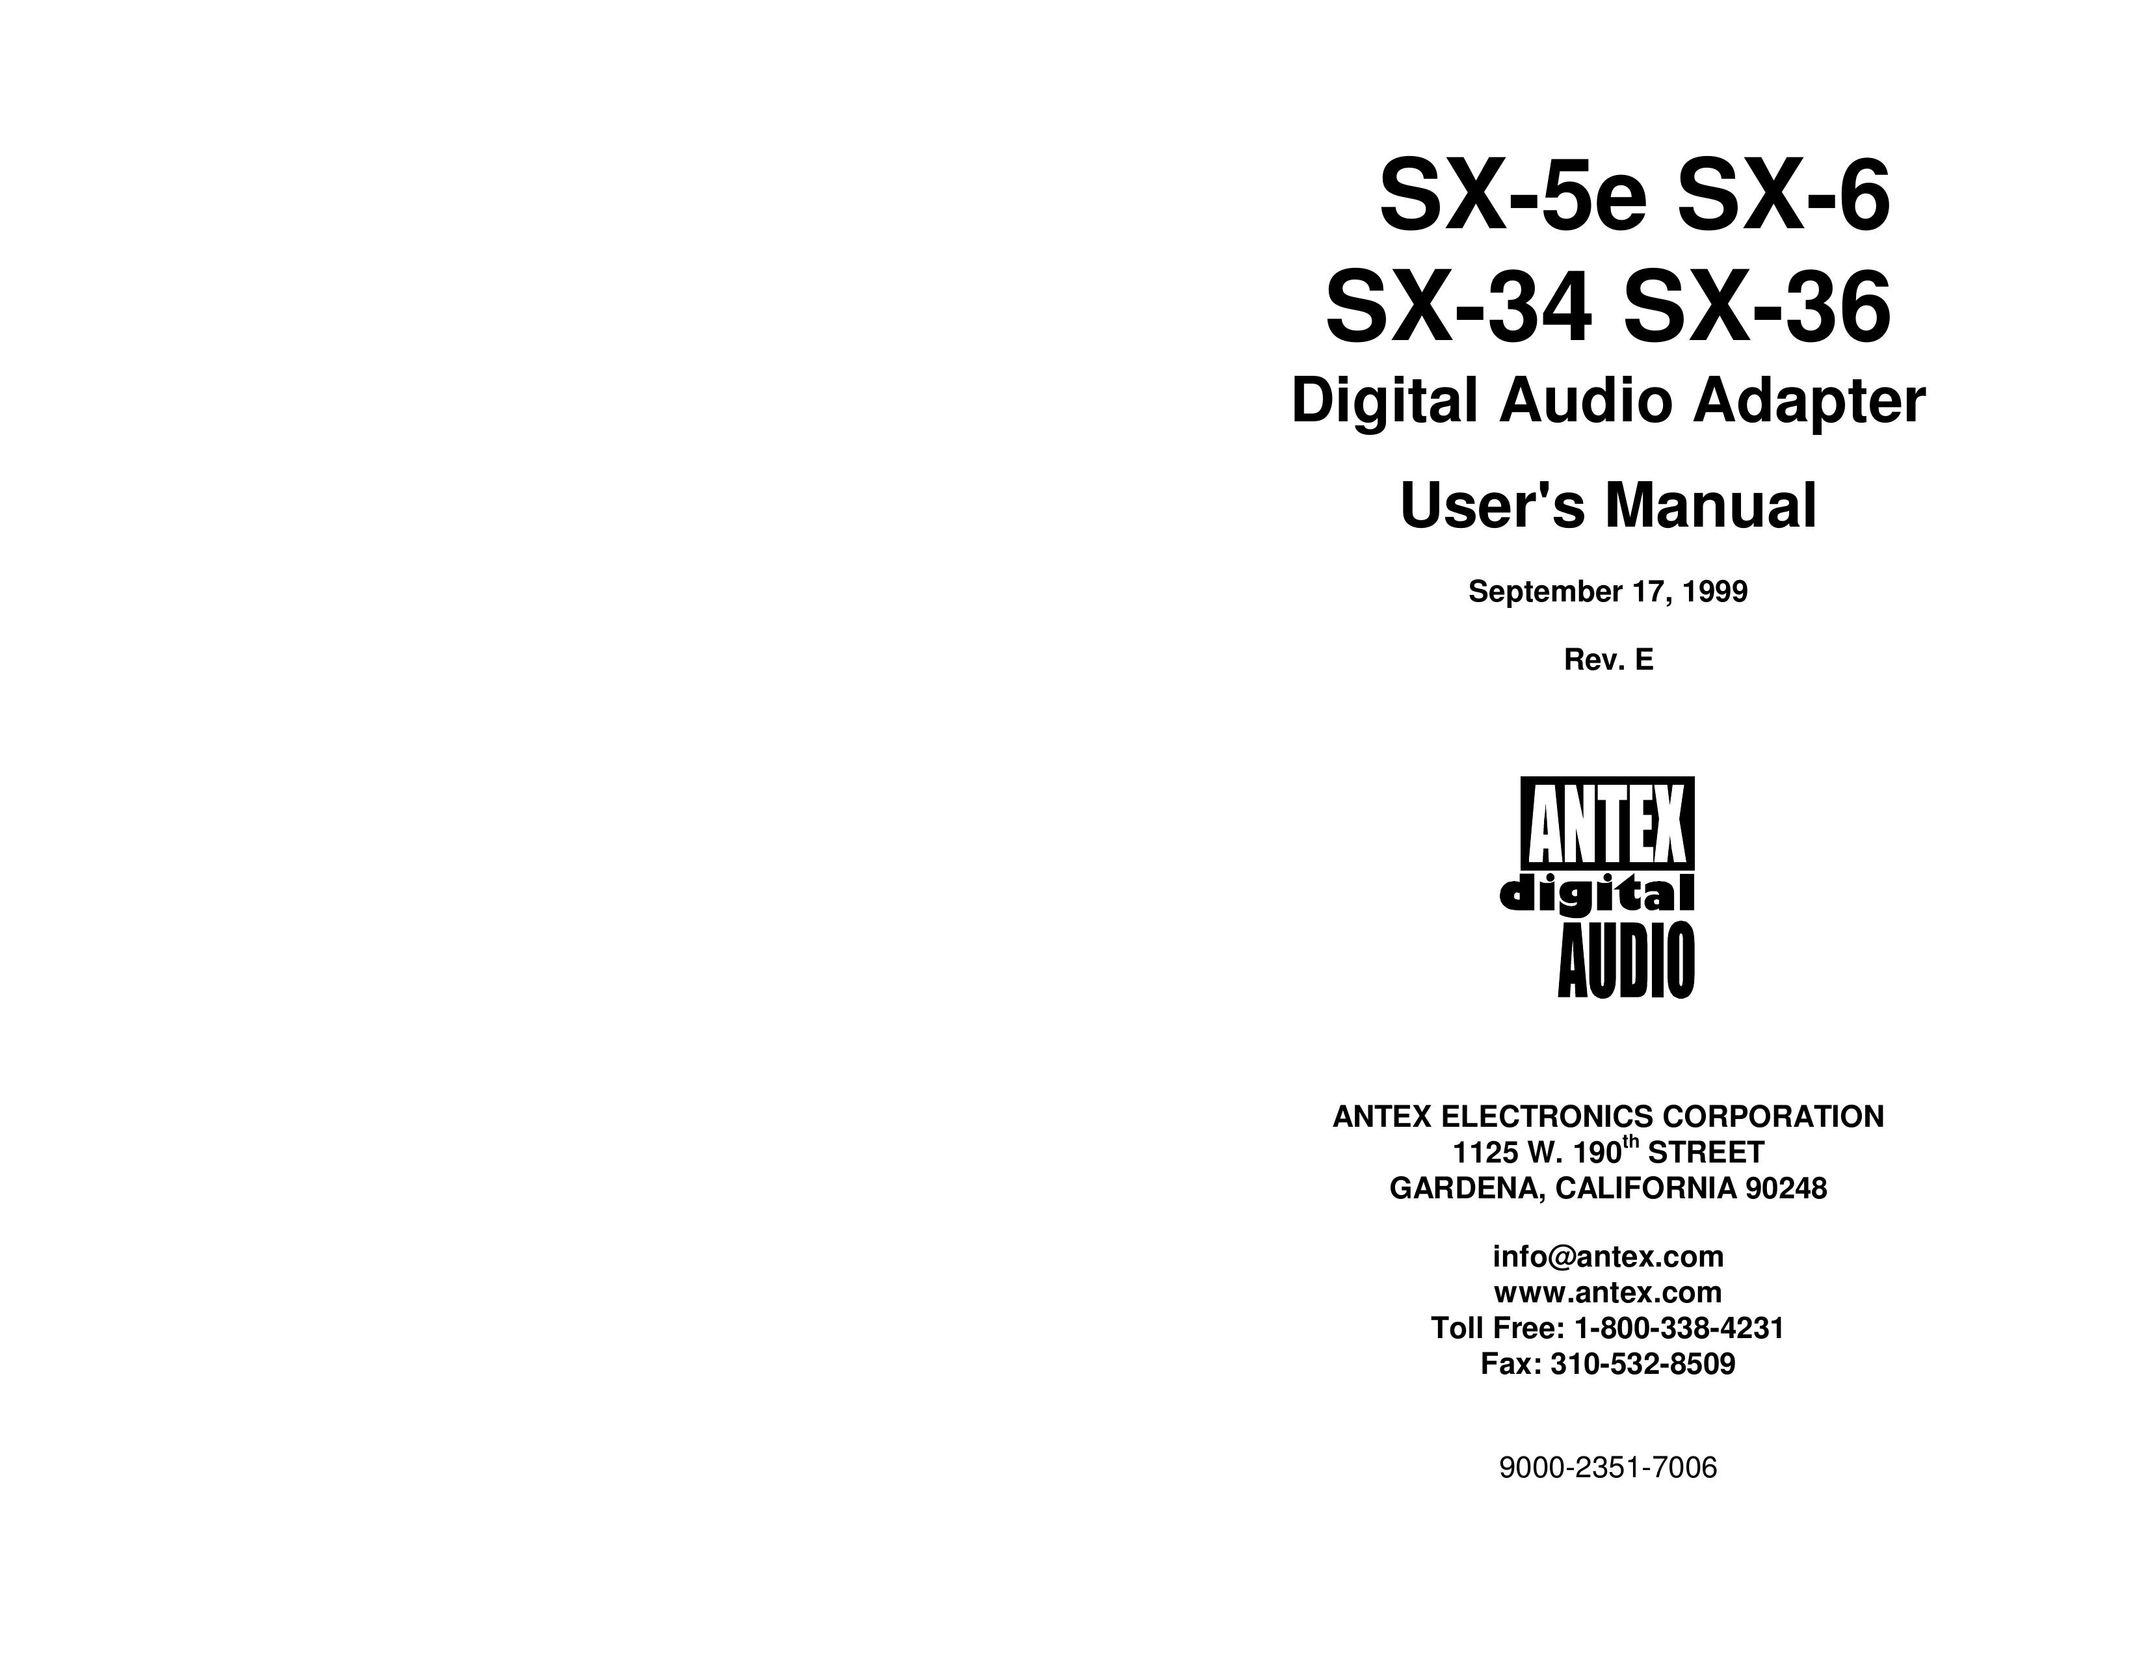 Antex electronic SX-6 Network Card User Manual